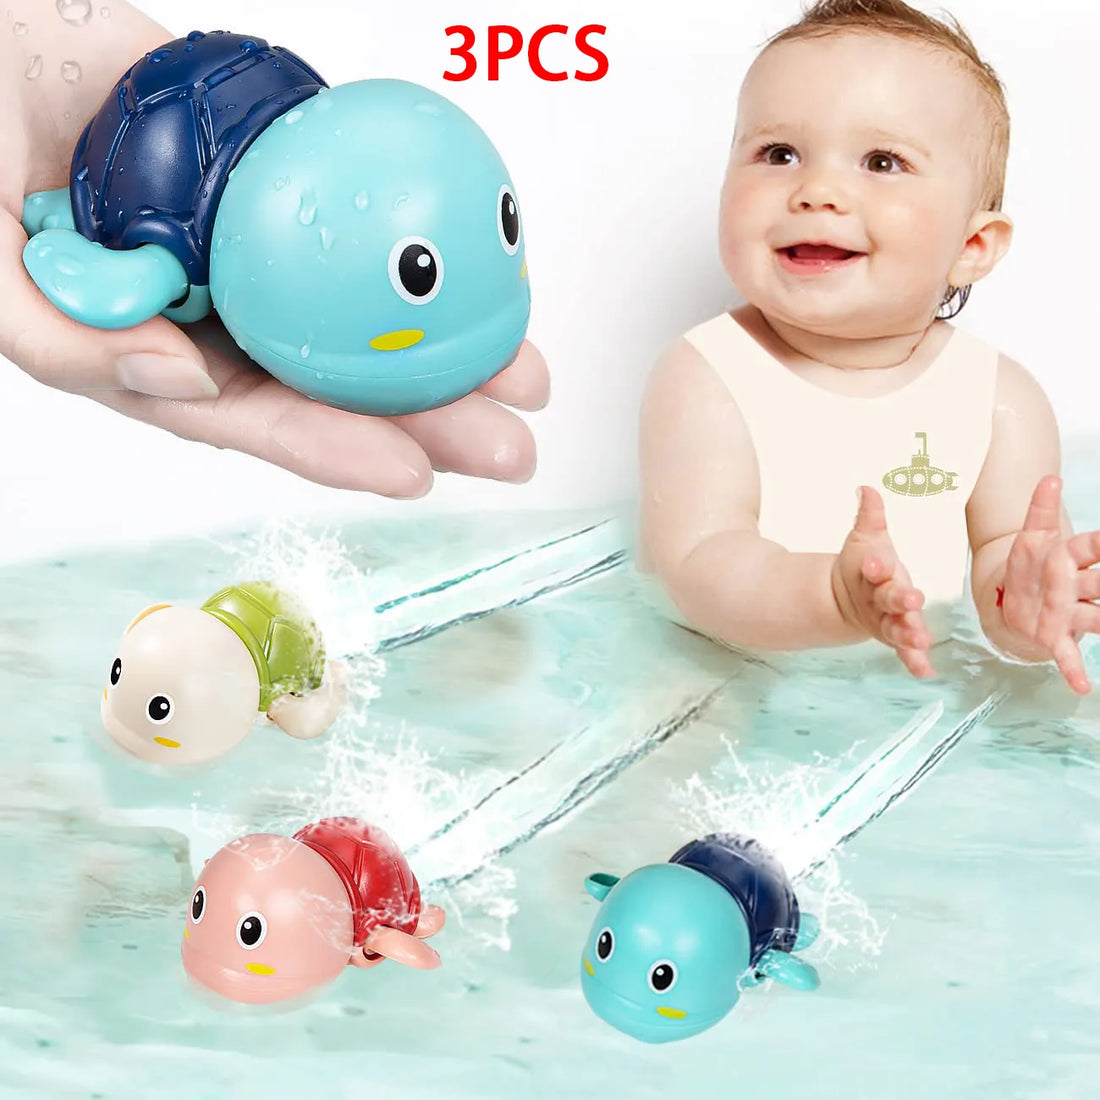 3 Baby Turtle Bath Toys